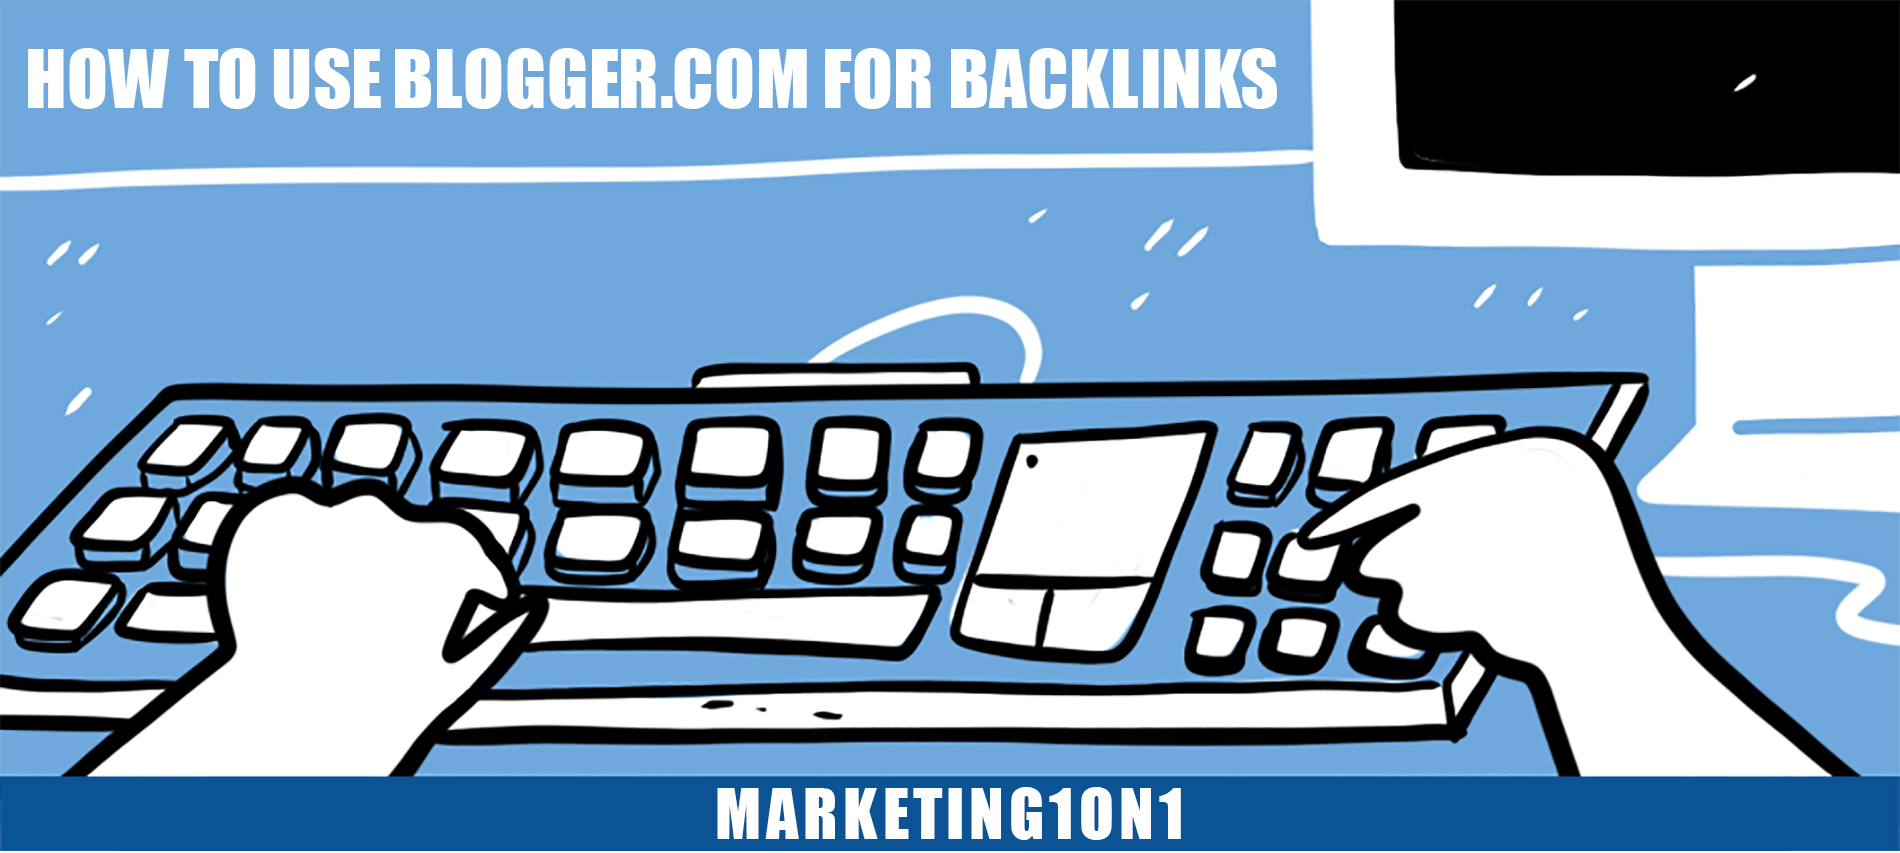 How to use blogger.com for backlinks?